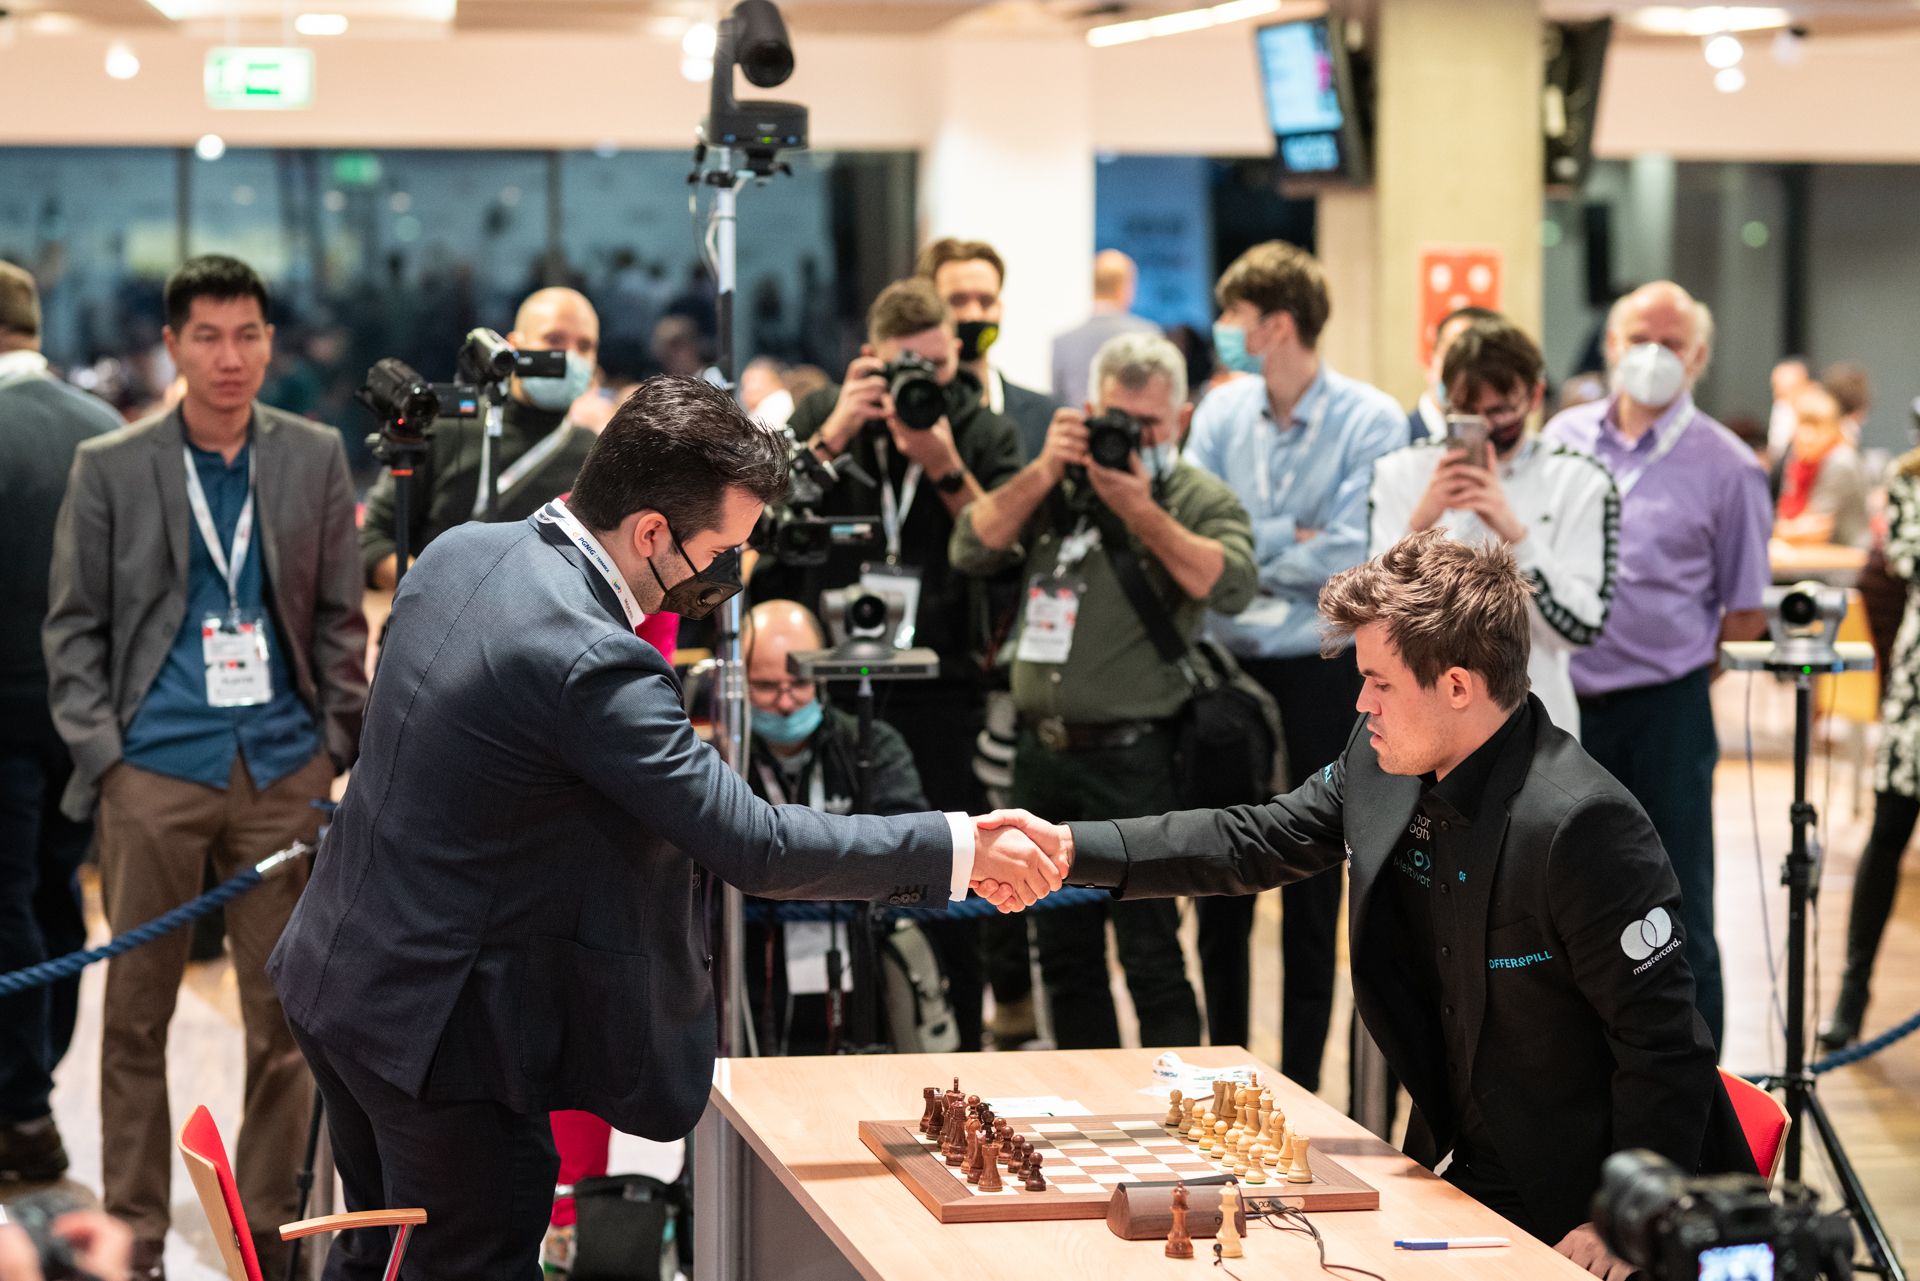 Nodirbek Abdusattorov - Campeão Mundial de Xadrez Rápido 2021